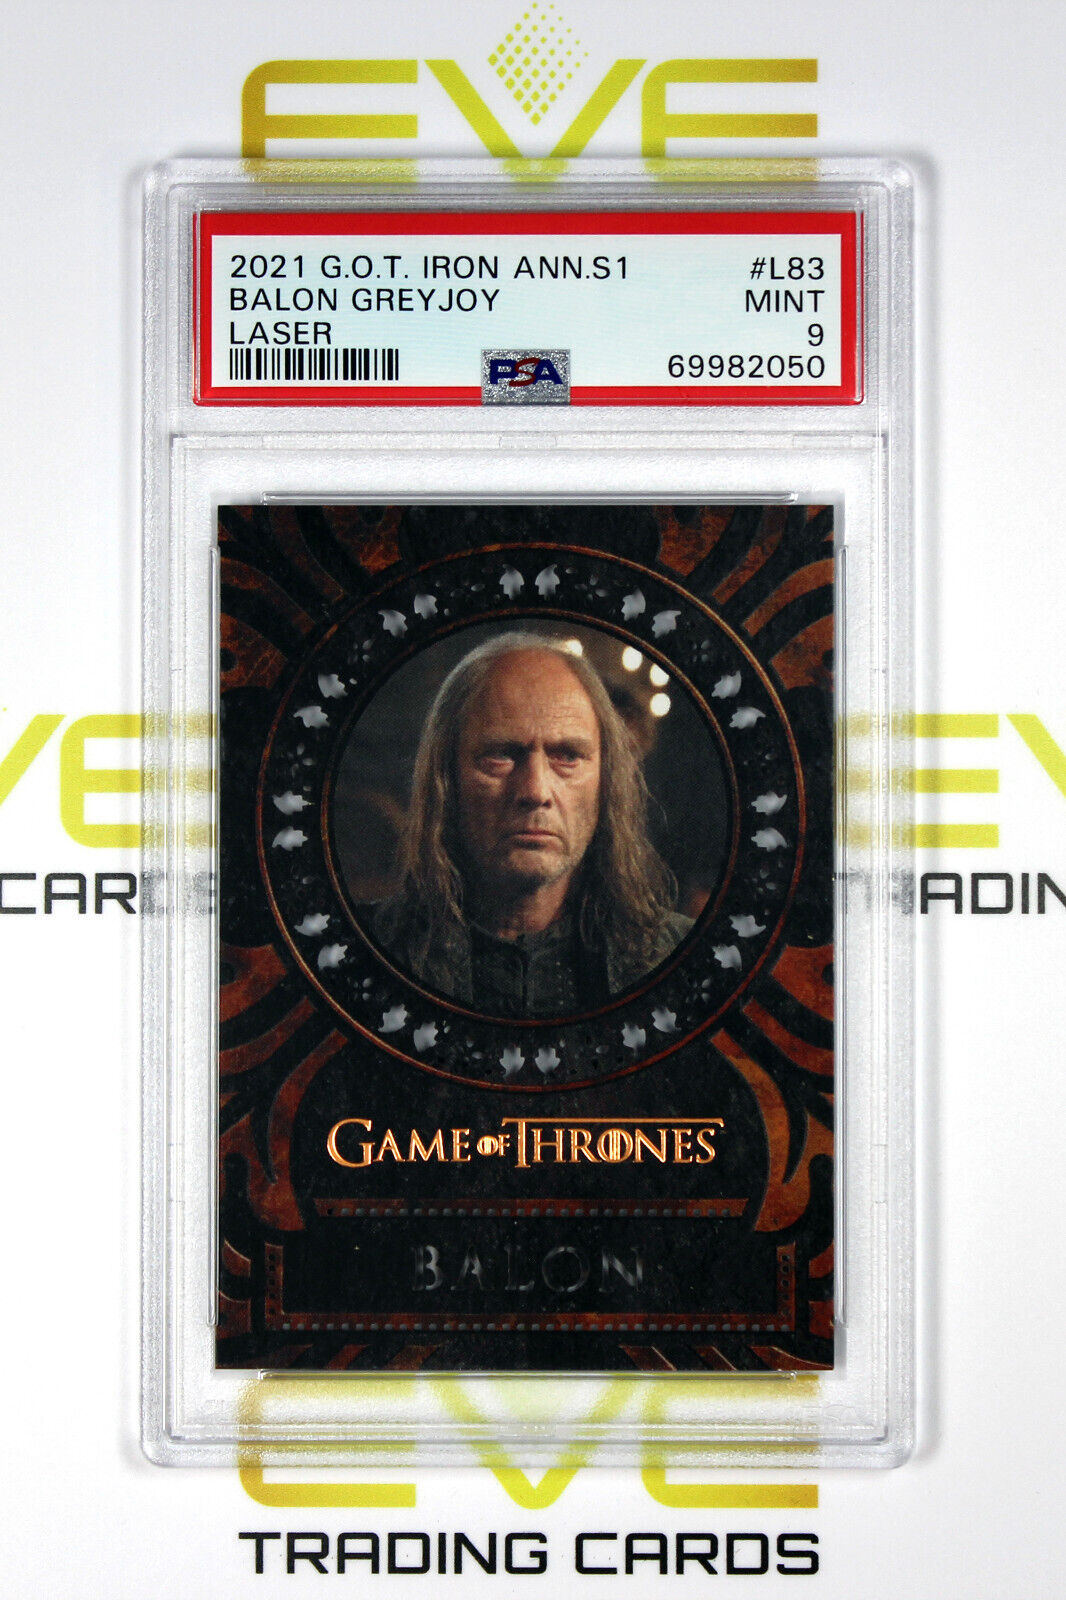 Graded Game of Thrones Card - #L83 2021 Balon Greyjoy - Laser - PSA 9